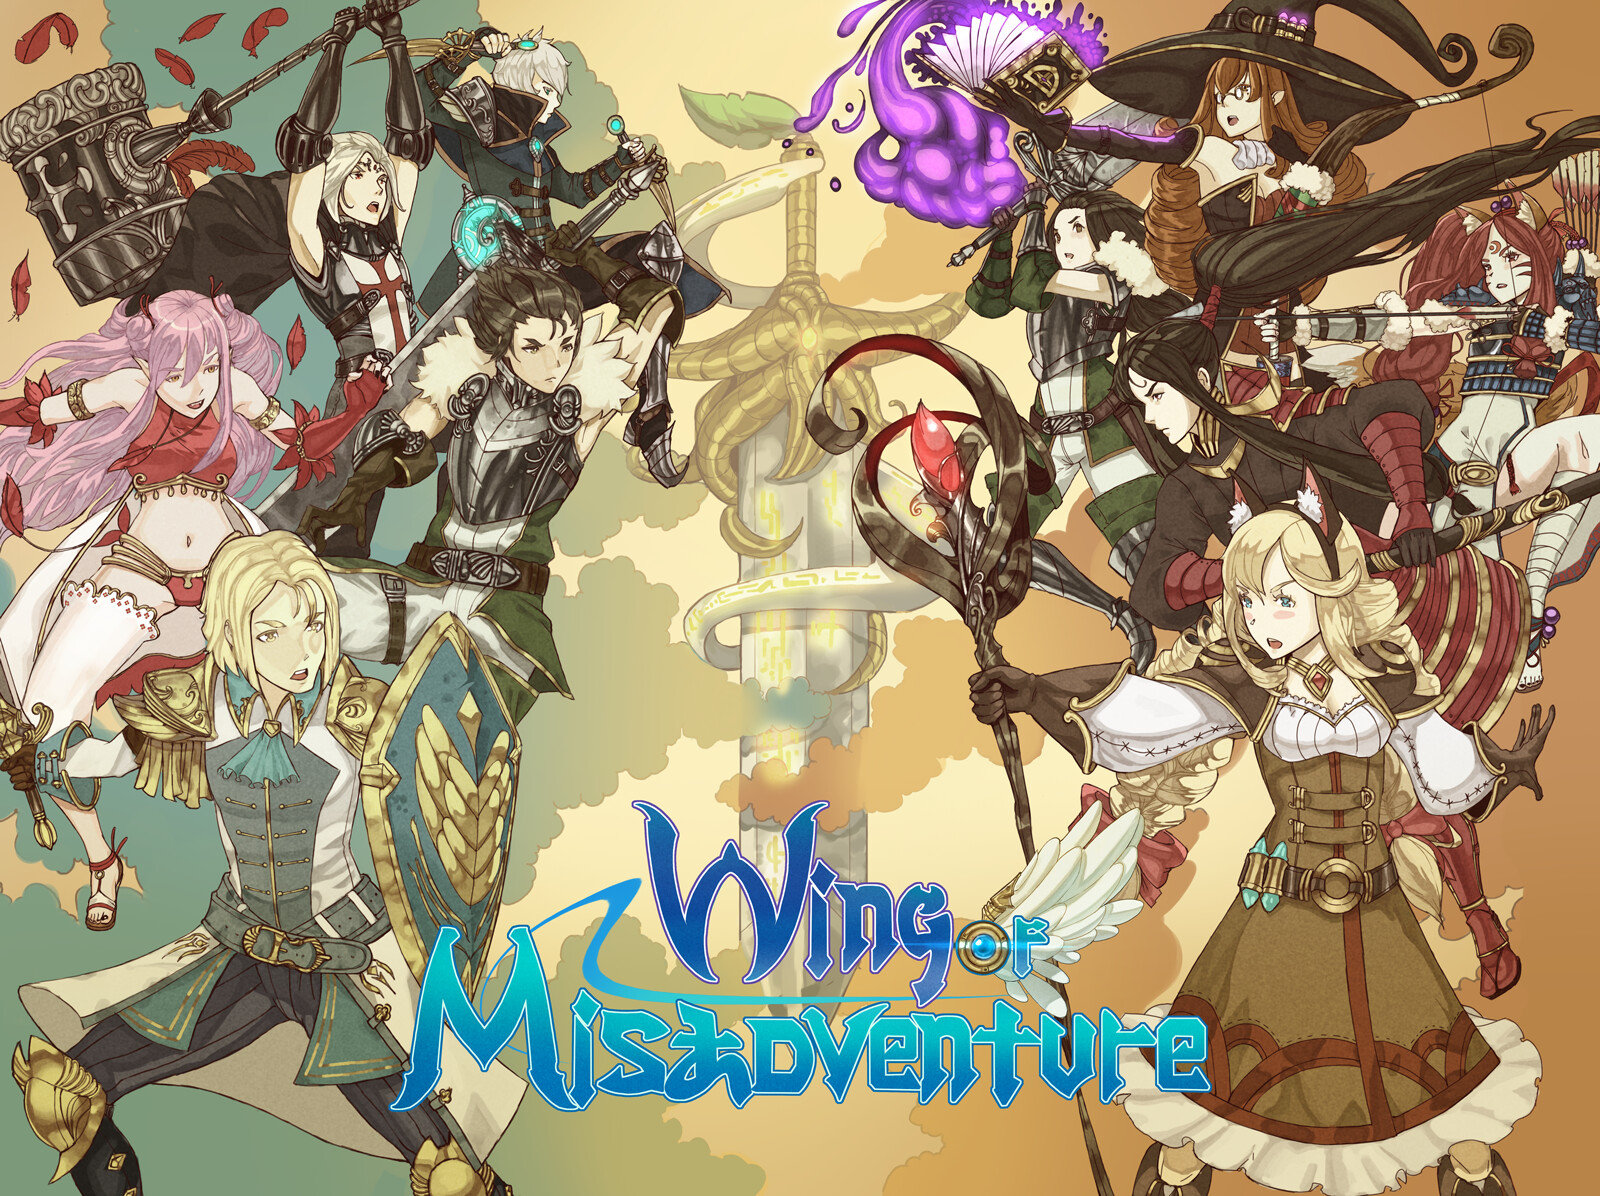 jaquette du jeu vidéo Wing of Misadventure